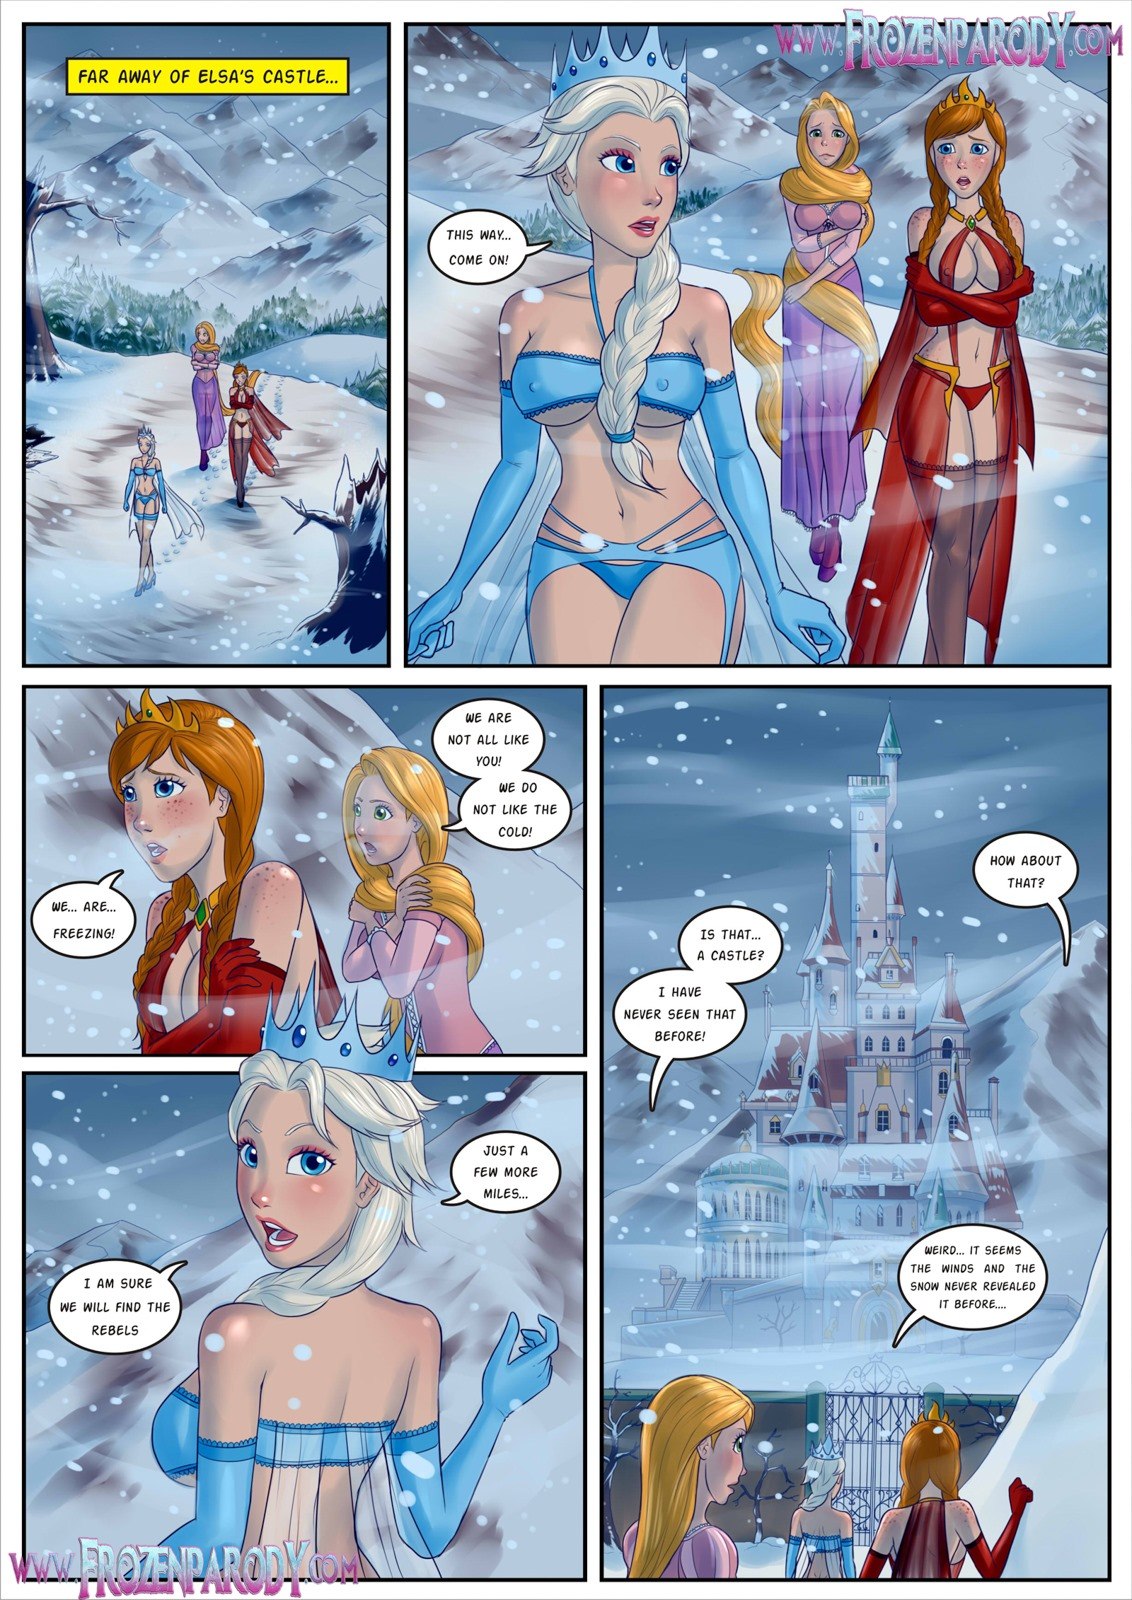 gotofap__Frozen-Parody-Part-5-Belle-001_3107772135.jpg